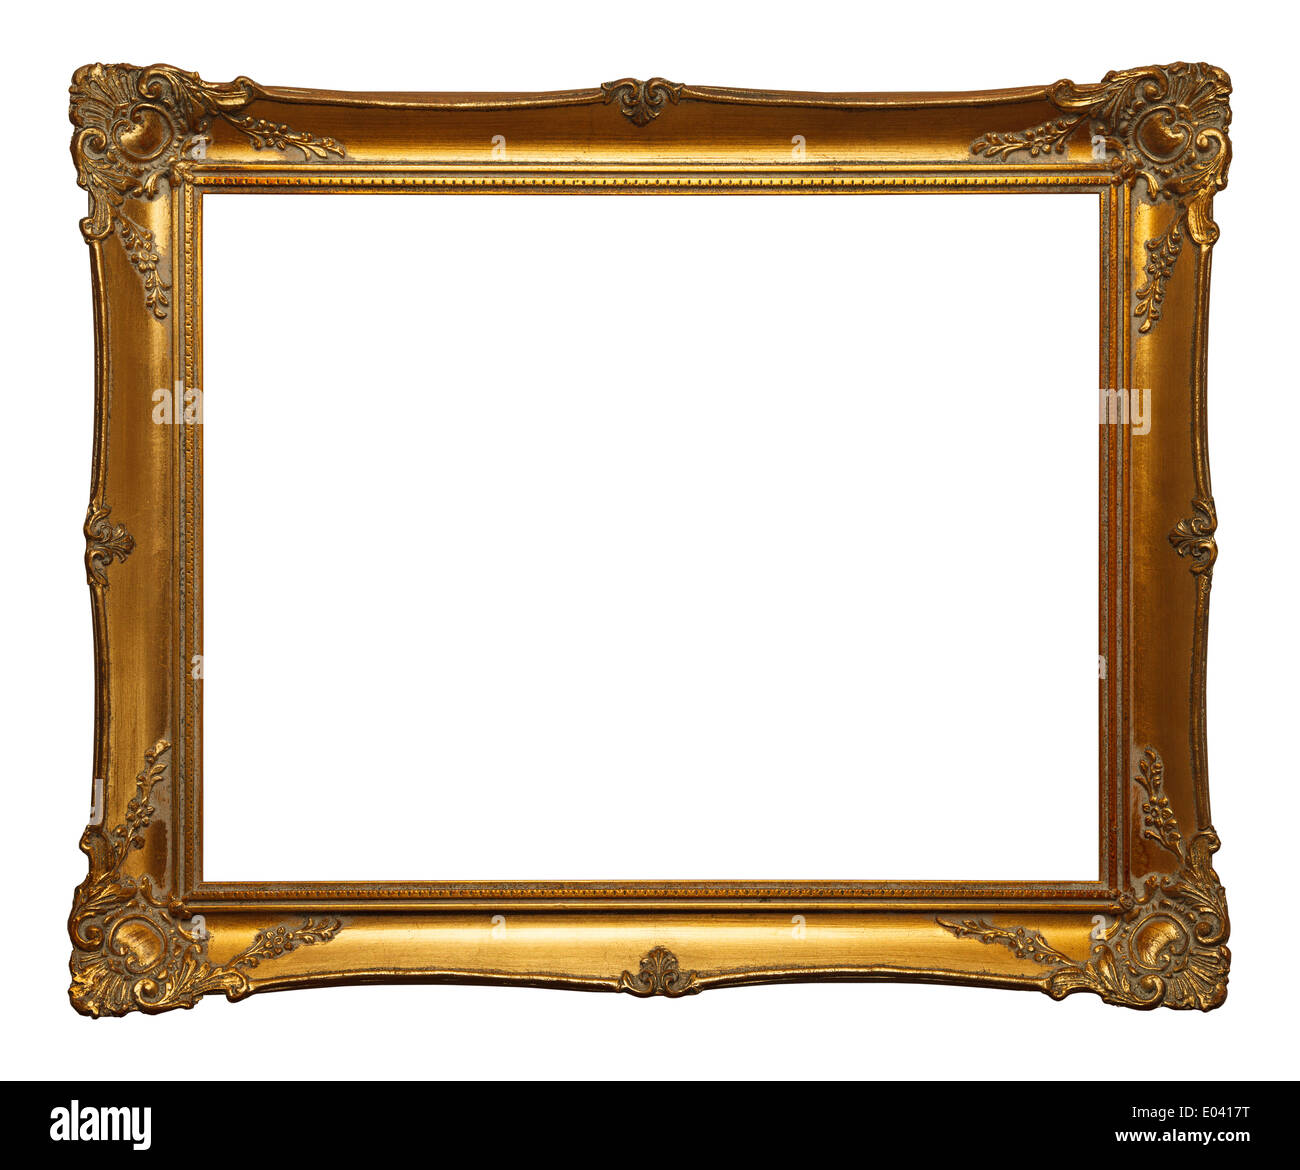 Old Gold Leaf Ornate Frame Isolated on White Background. Stock Photo